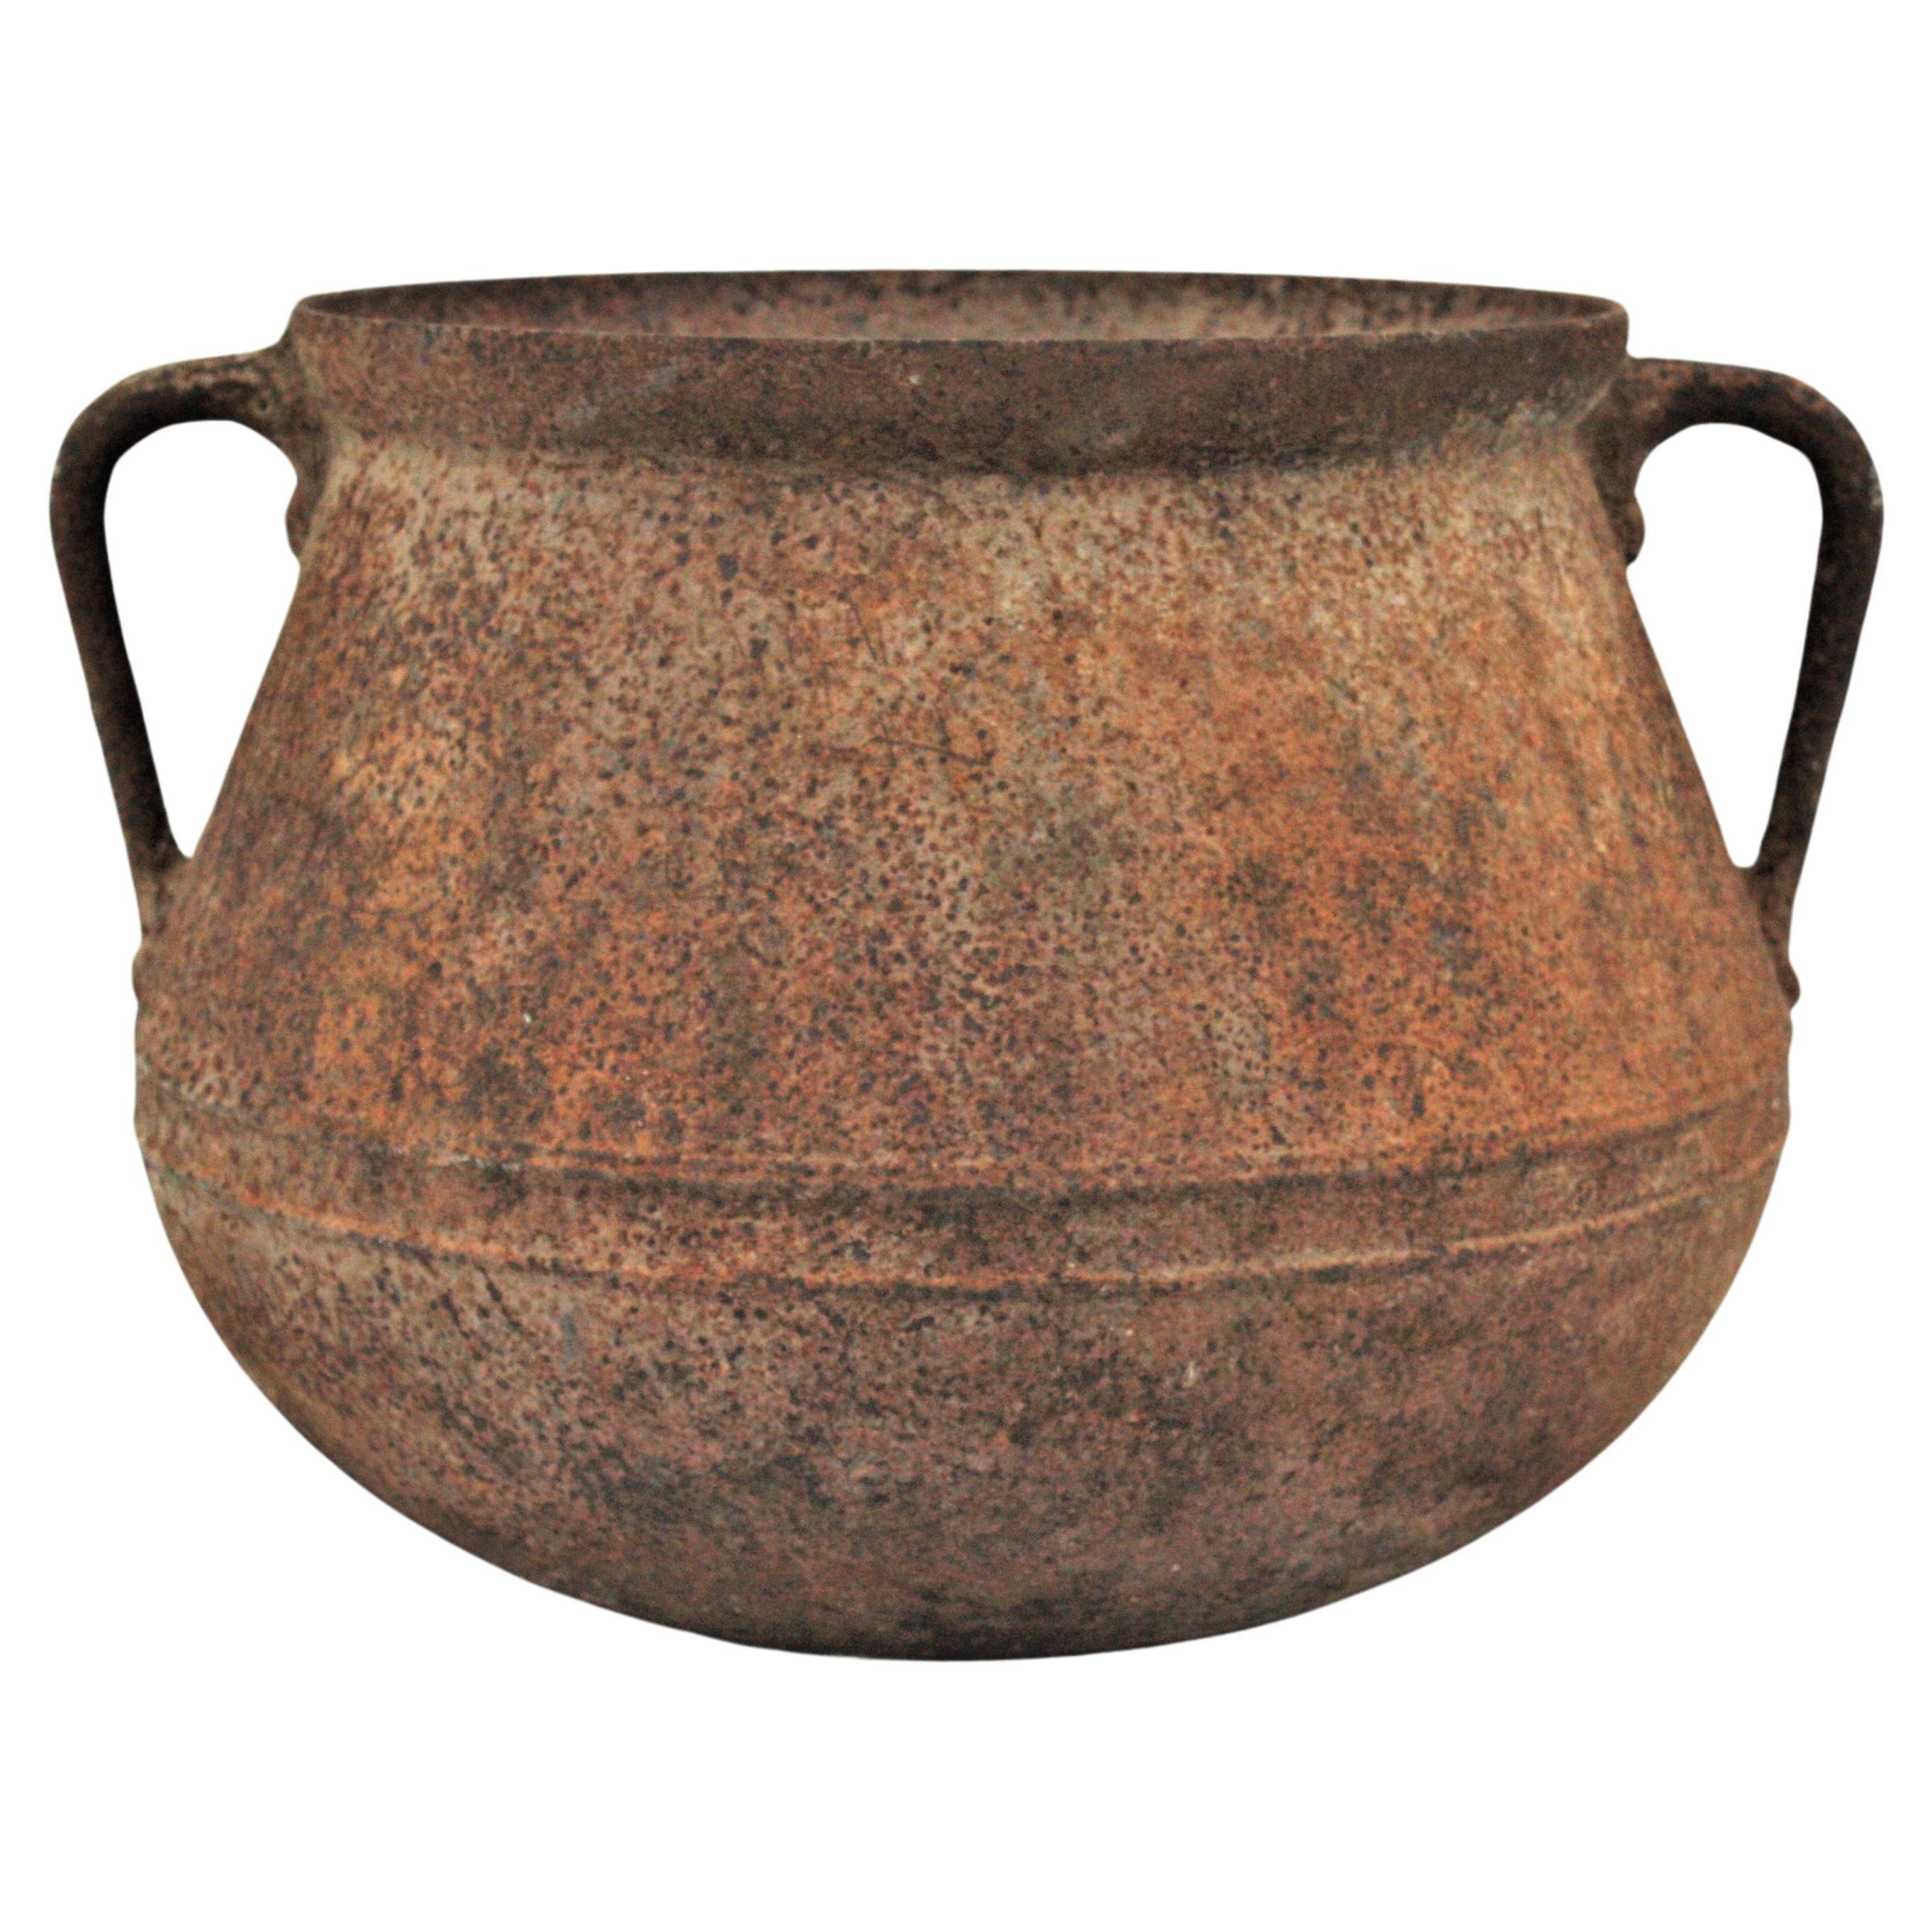 Spanish Rustic Iron Cauldron Pot or Vessel with Rusty Original Patina